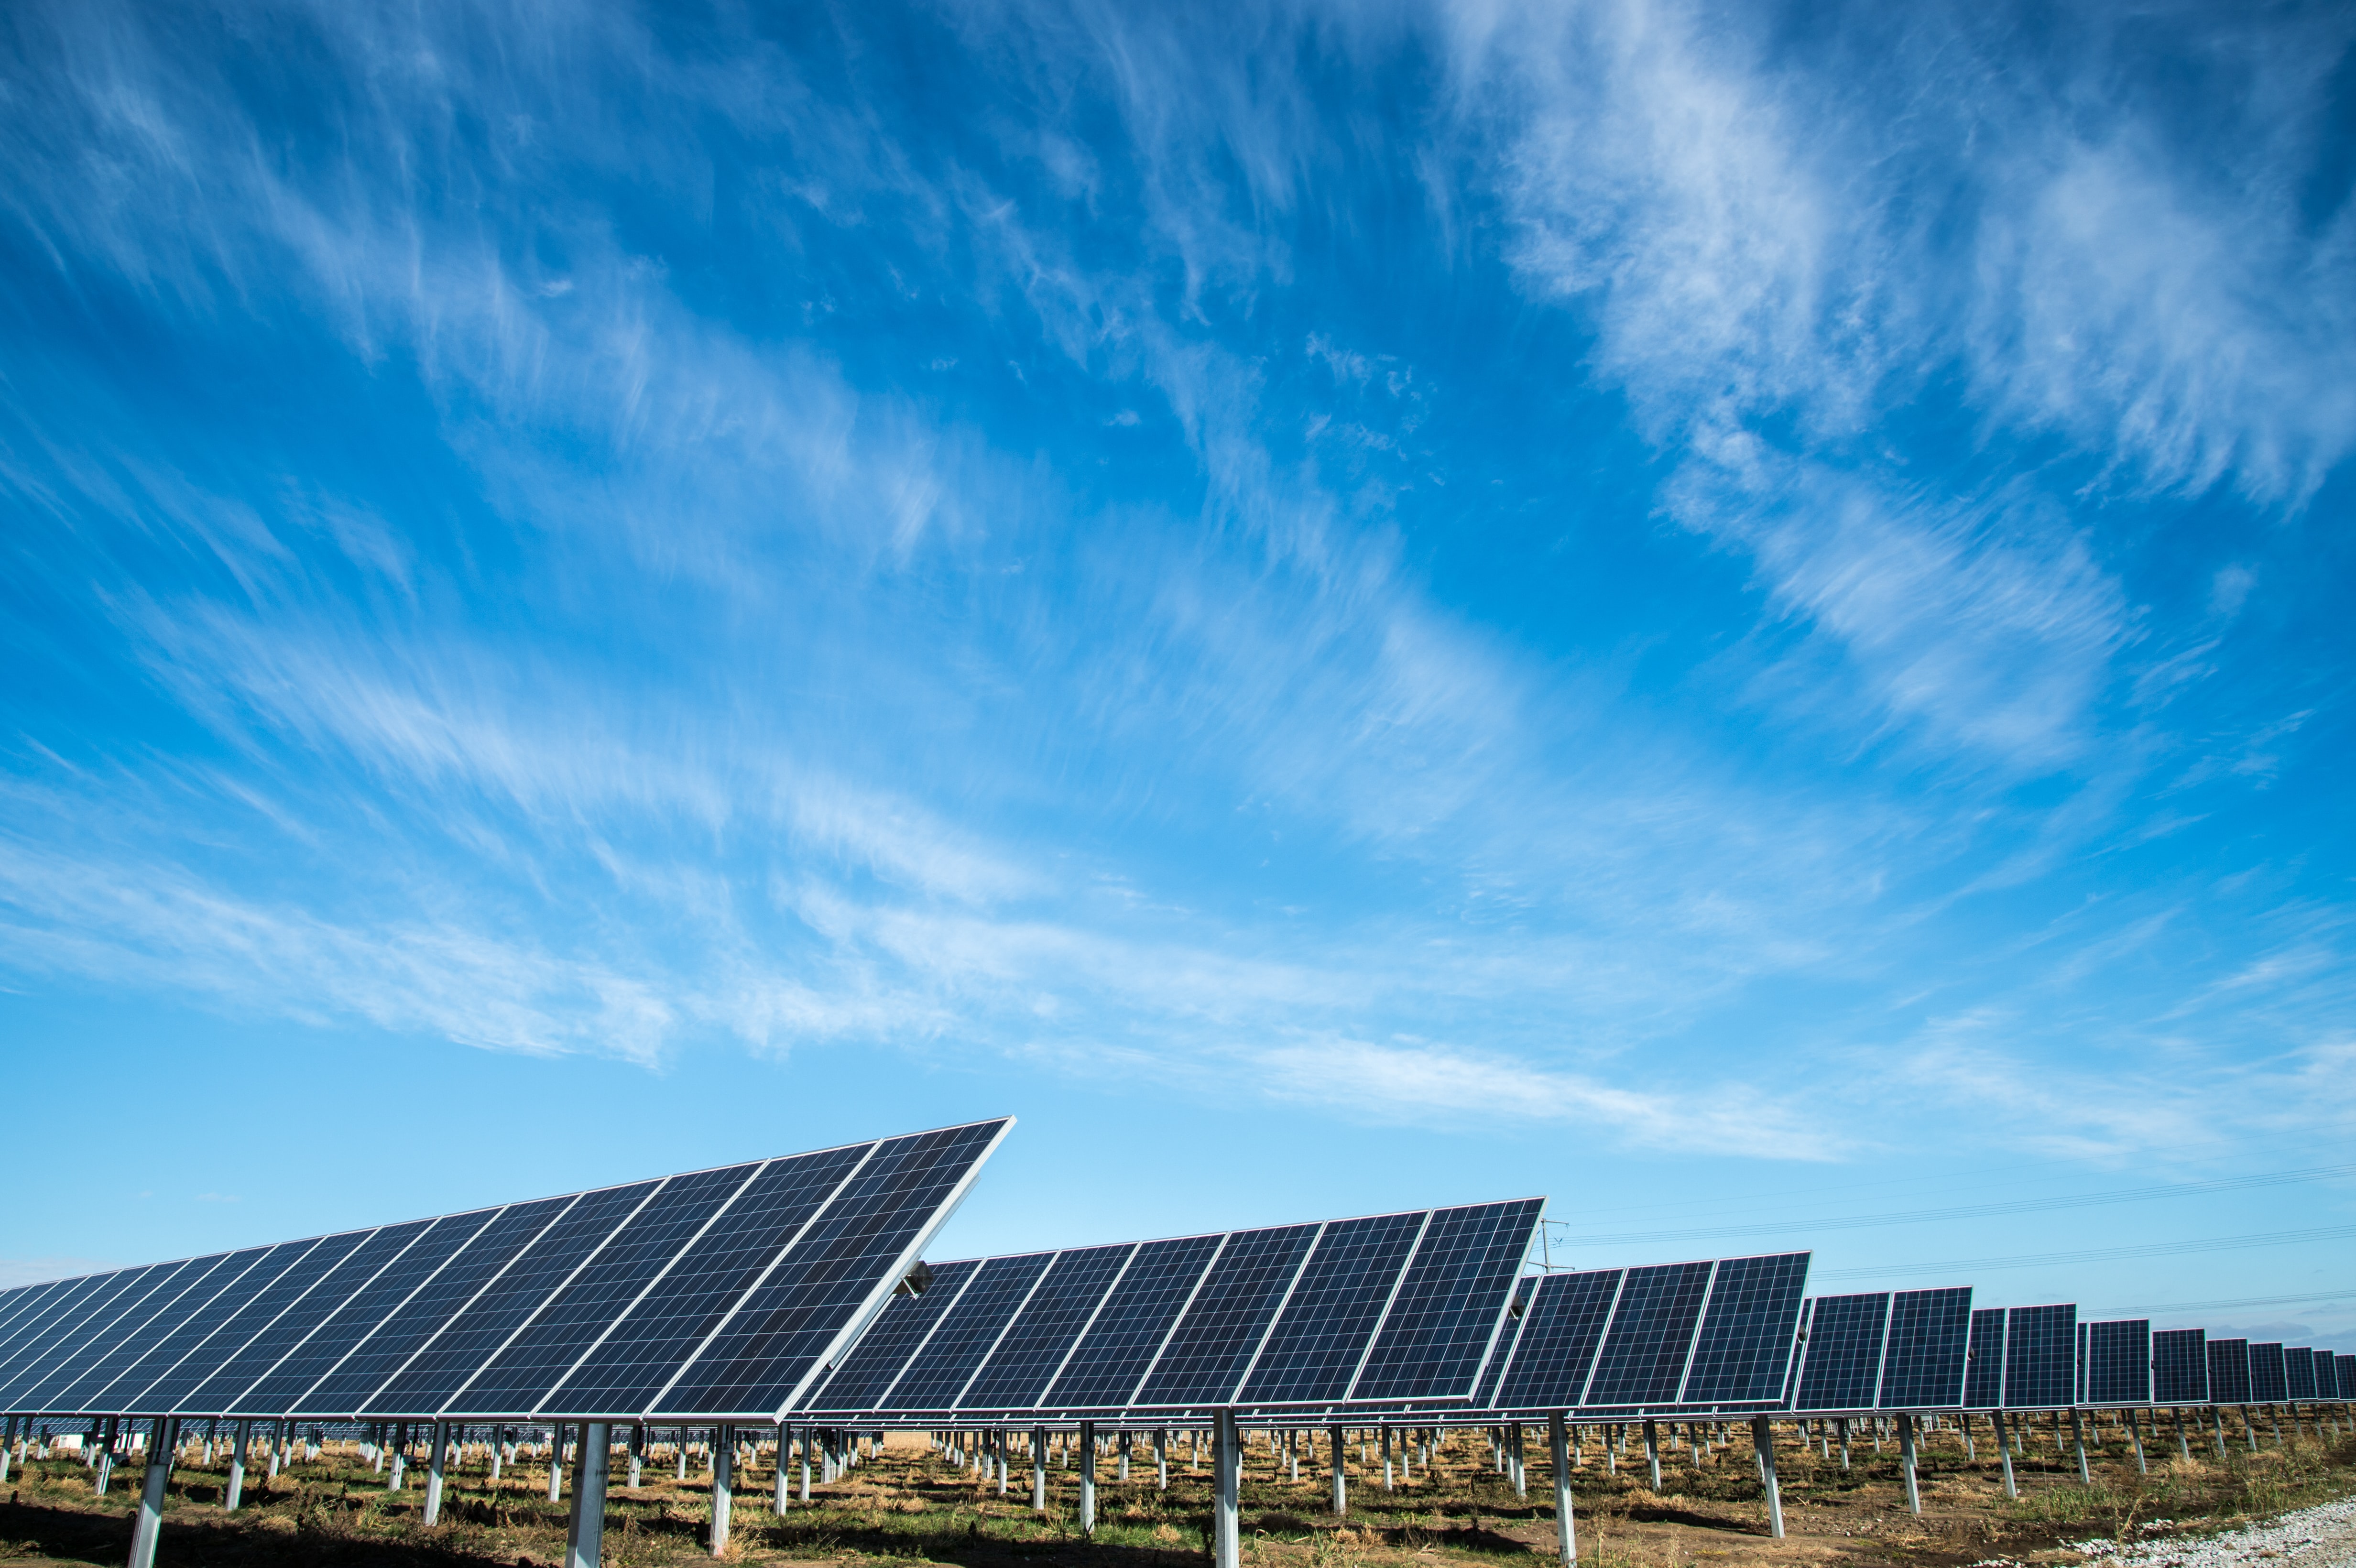 Sri Lanka’s first ever agrivoltaic solar power plant opened